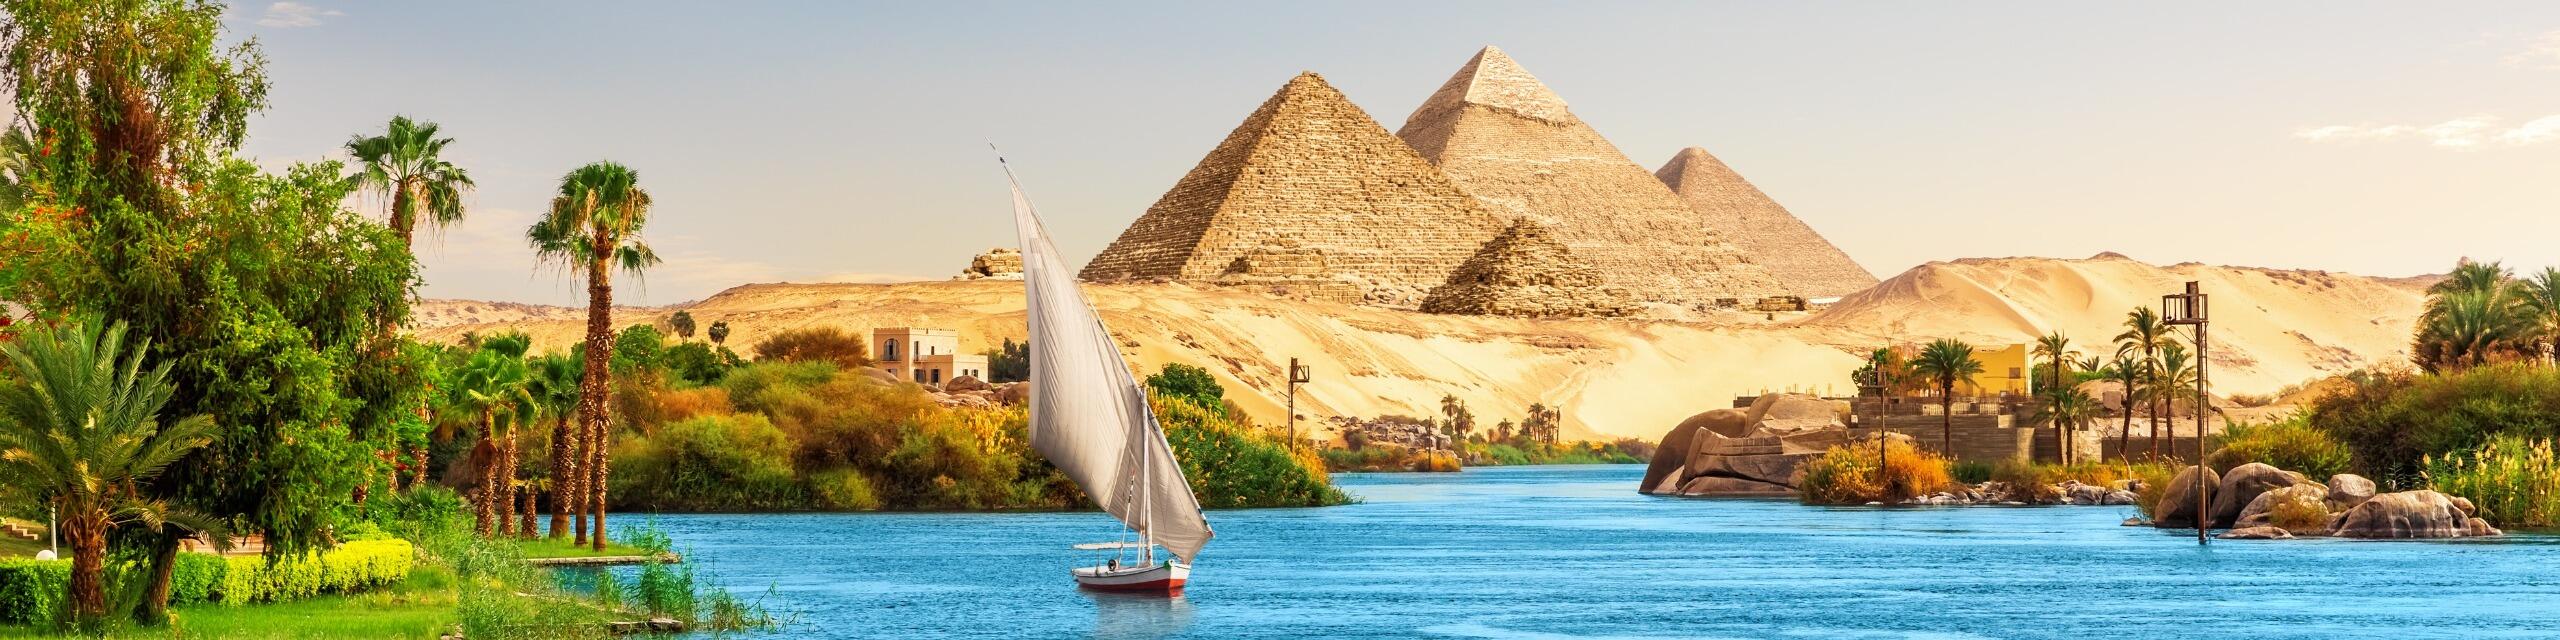 Ägypten | Golf & Kultur | Silvester im Land der Pharaonen